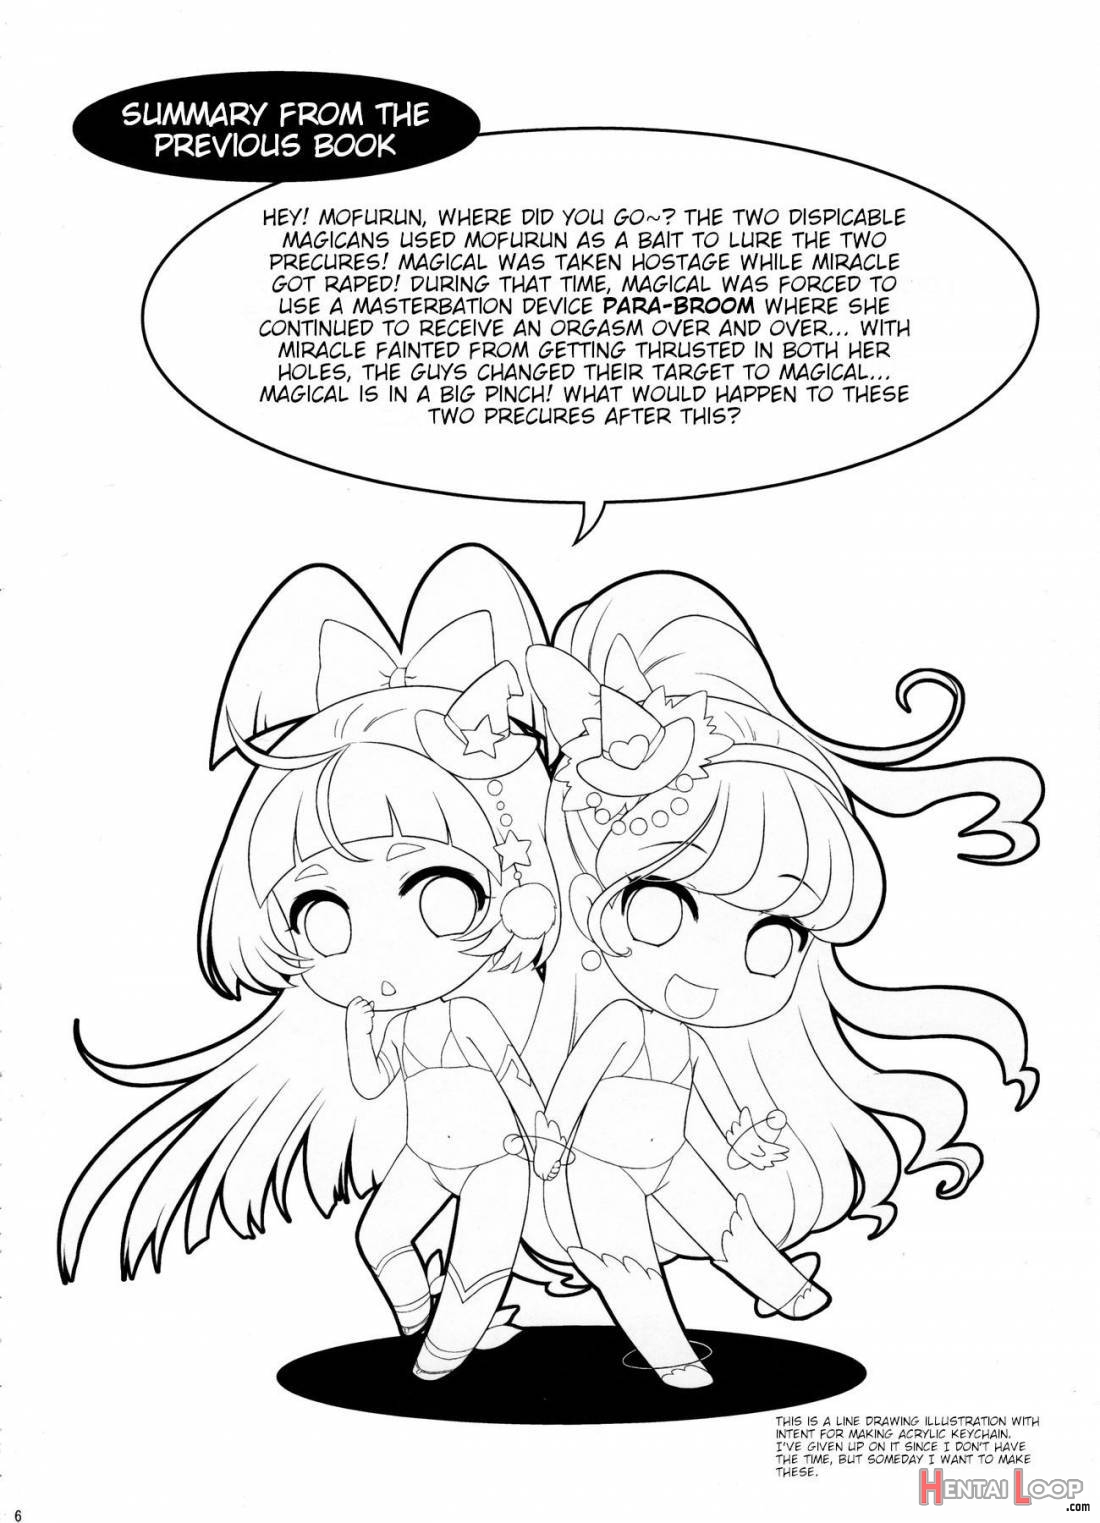 Yarareru Magical page 4